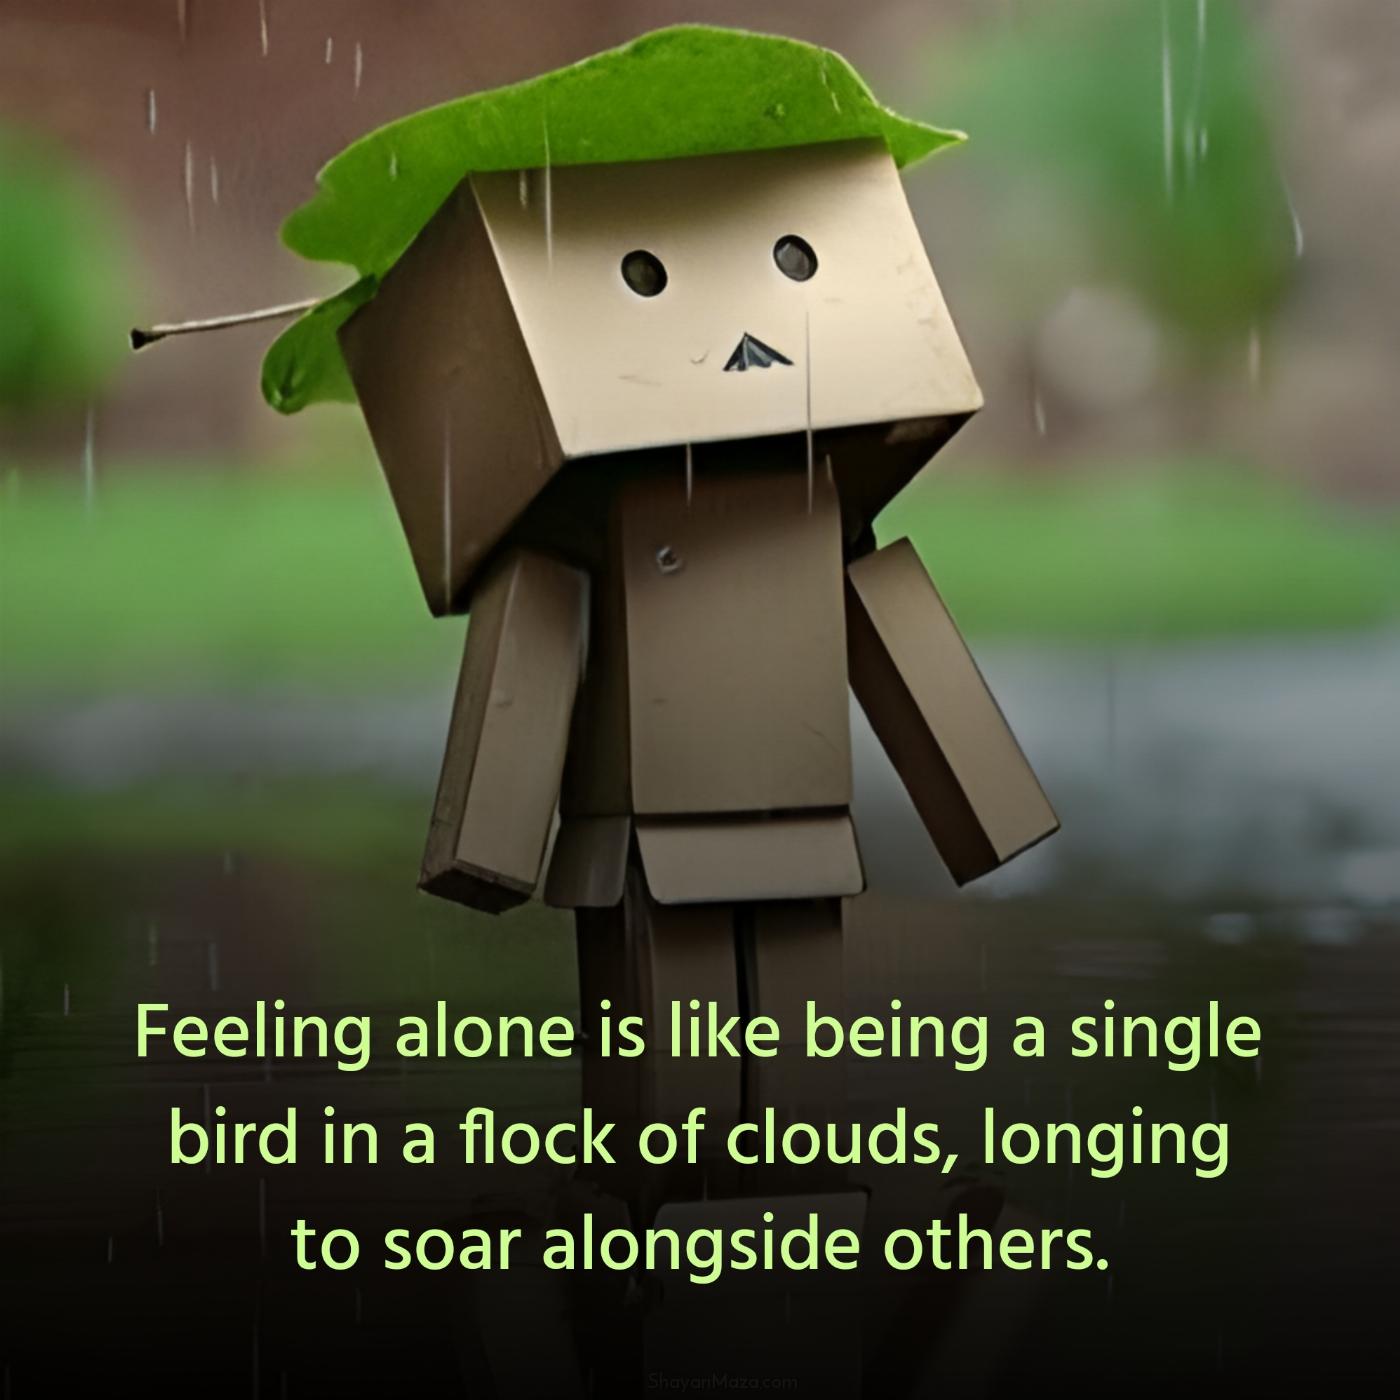 Feeling alone is like being a single bird in a flock of clouds